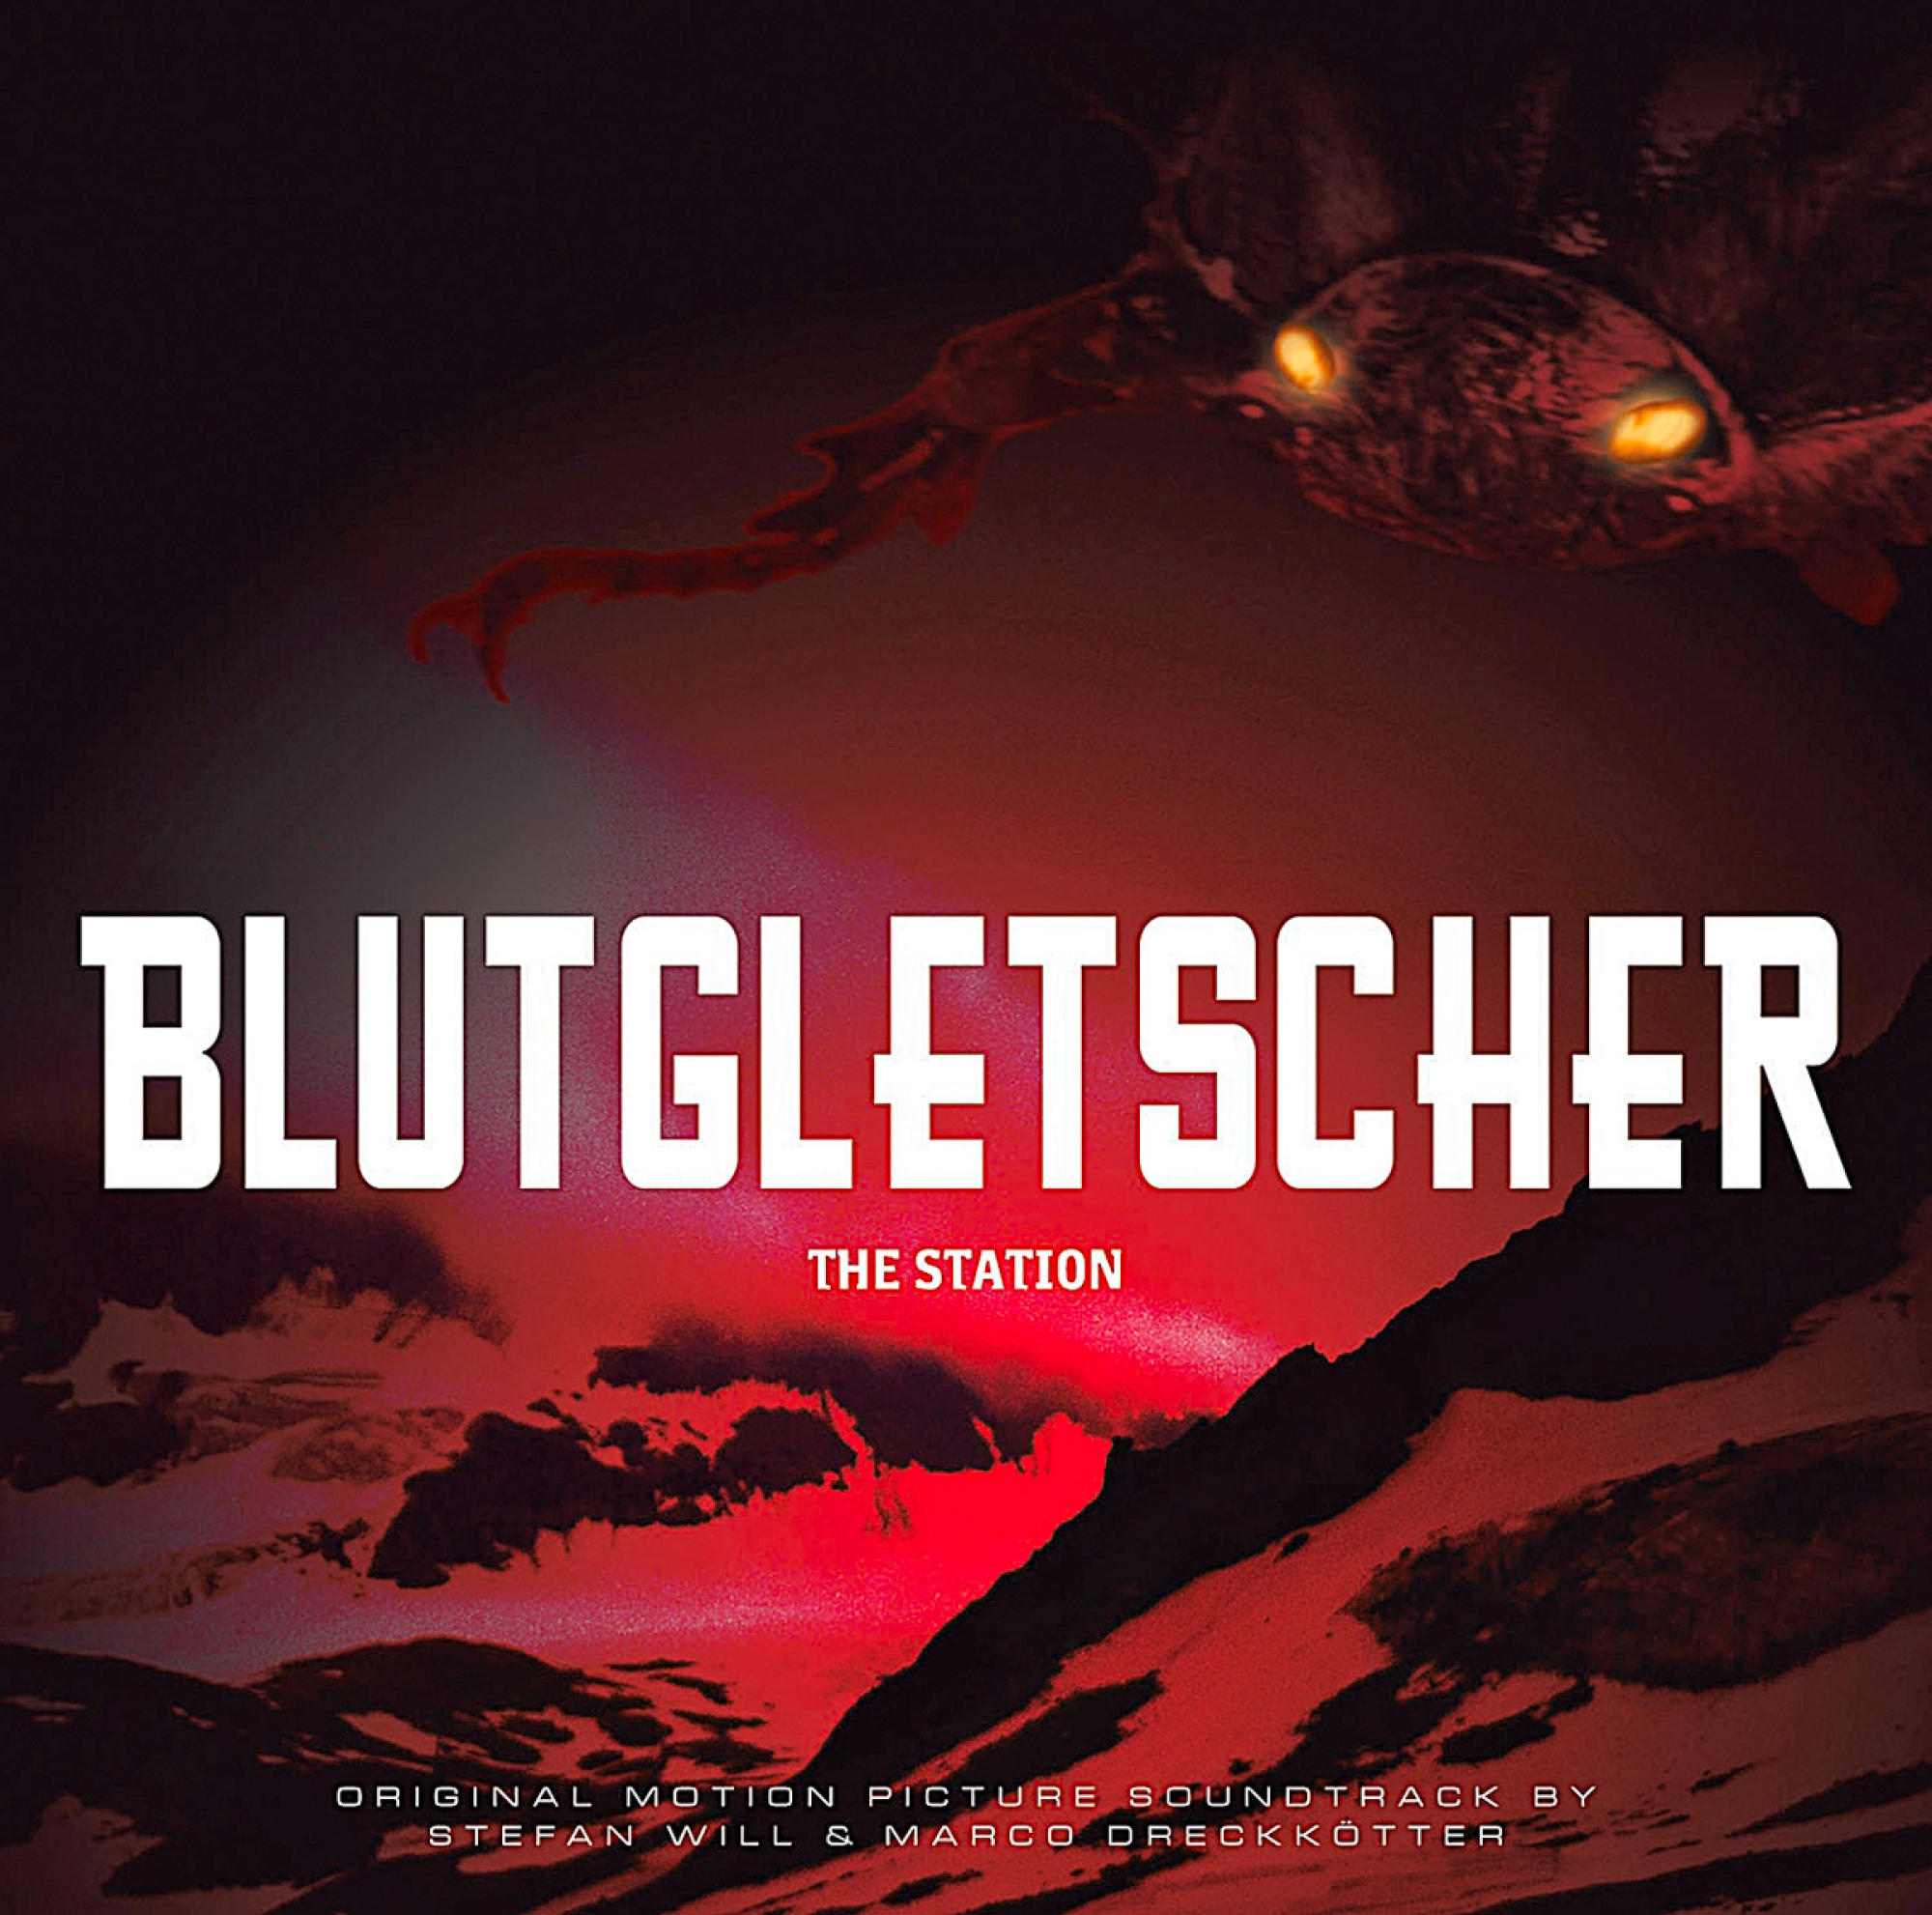 VARIOUS, O.S.T. - Blutgletscher (Bonus:Rammbock Soundtrack) (CD) 